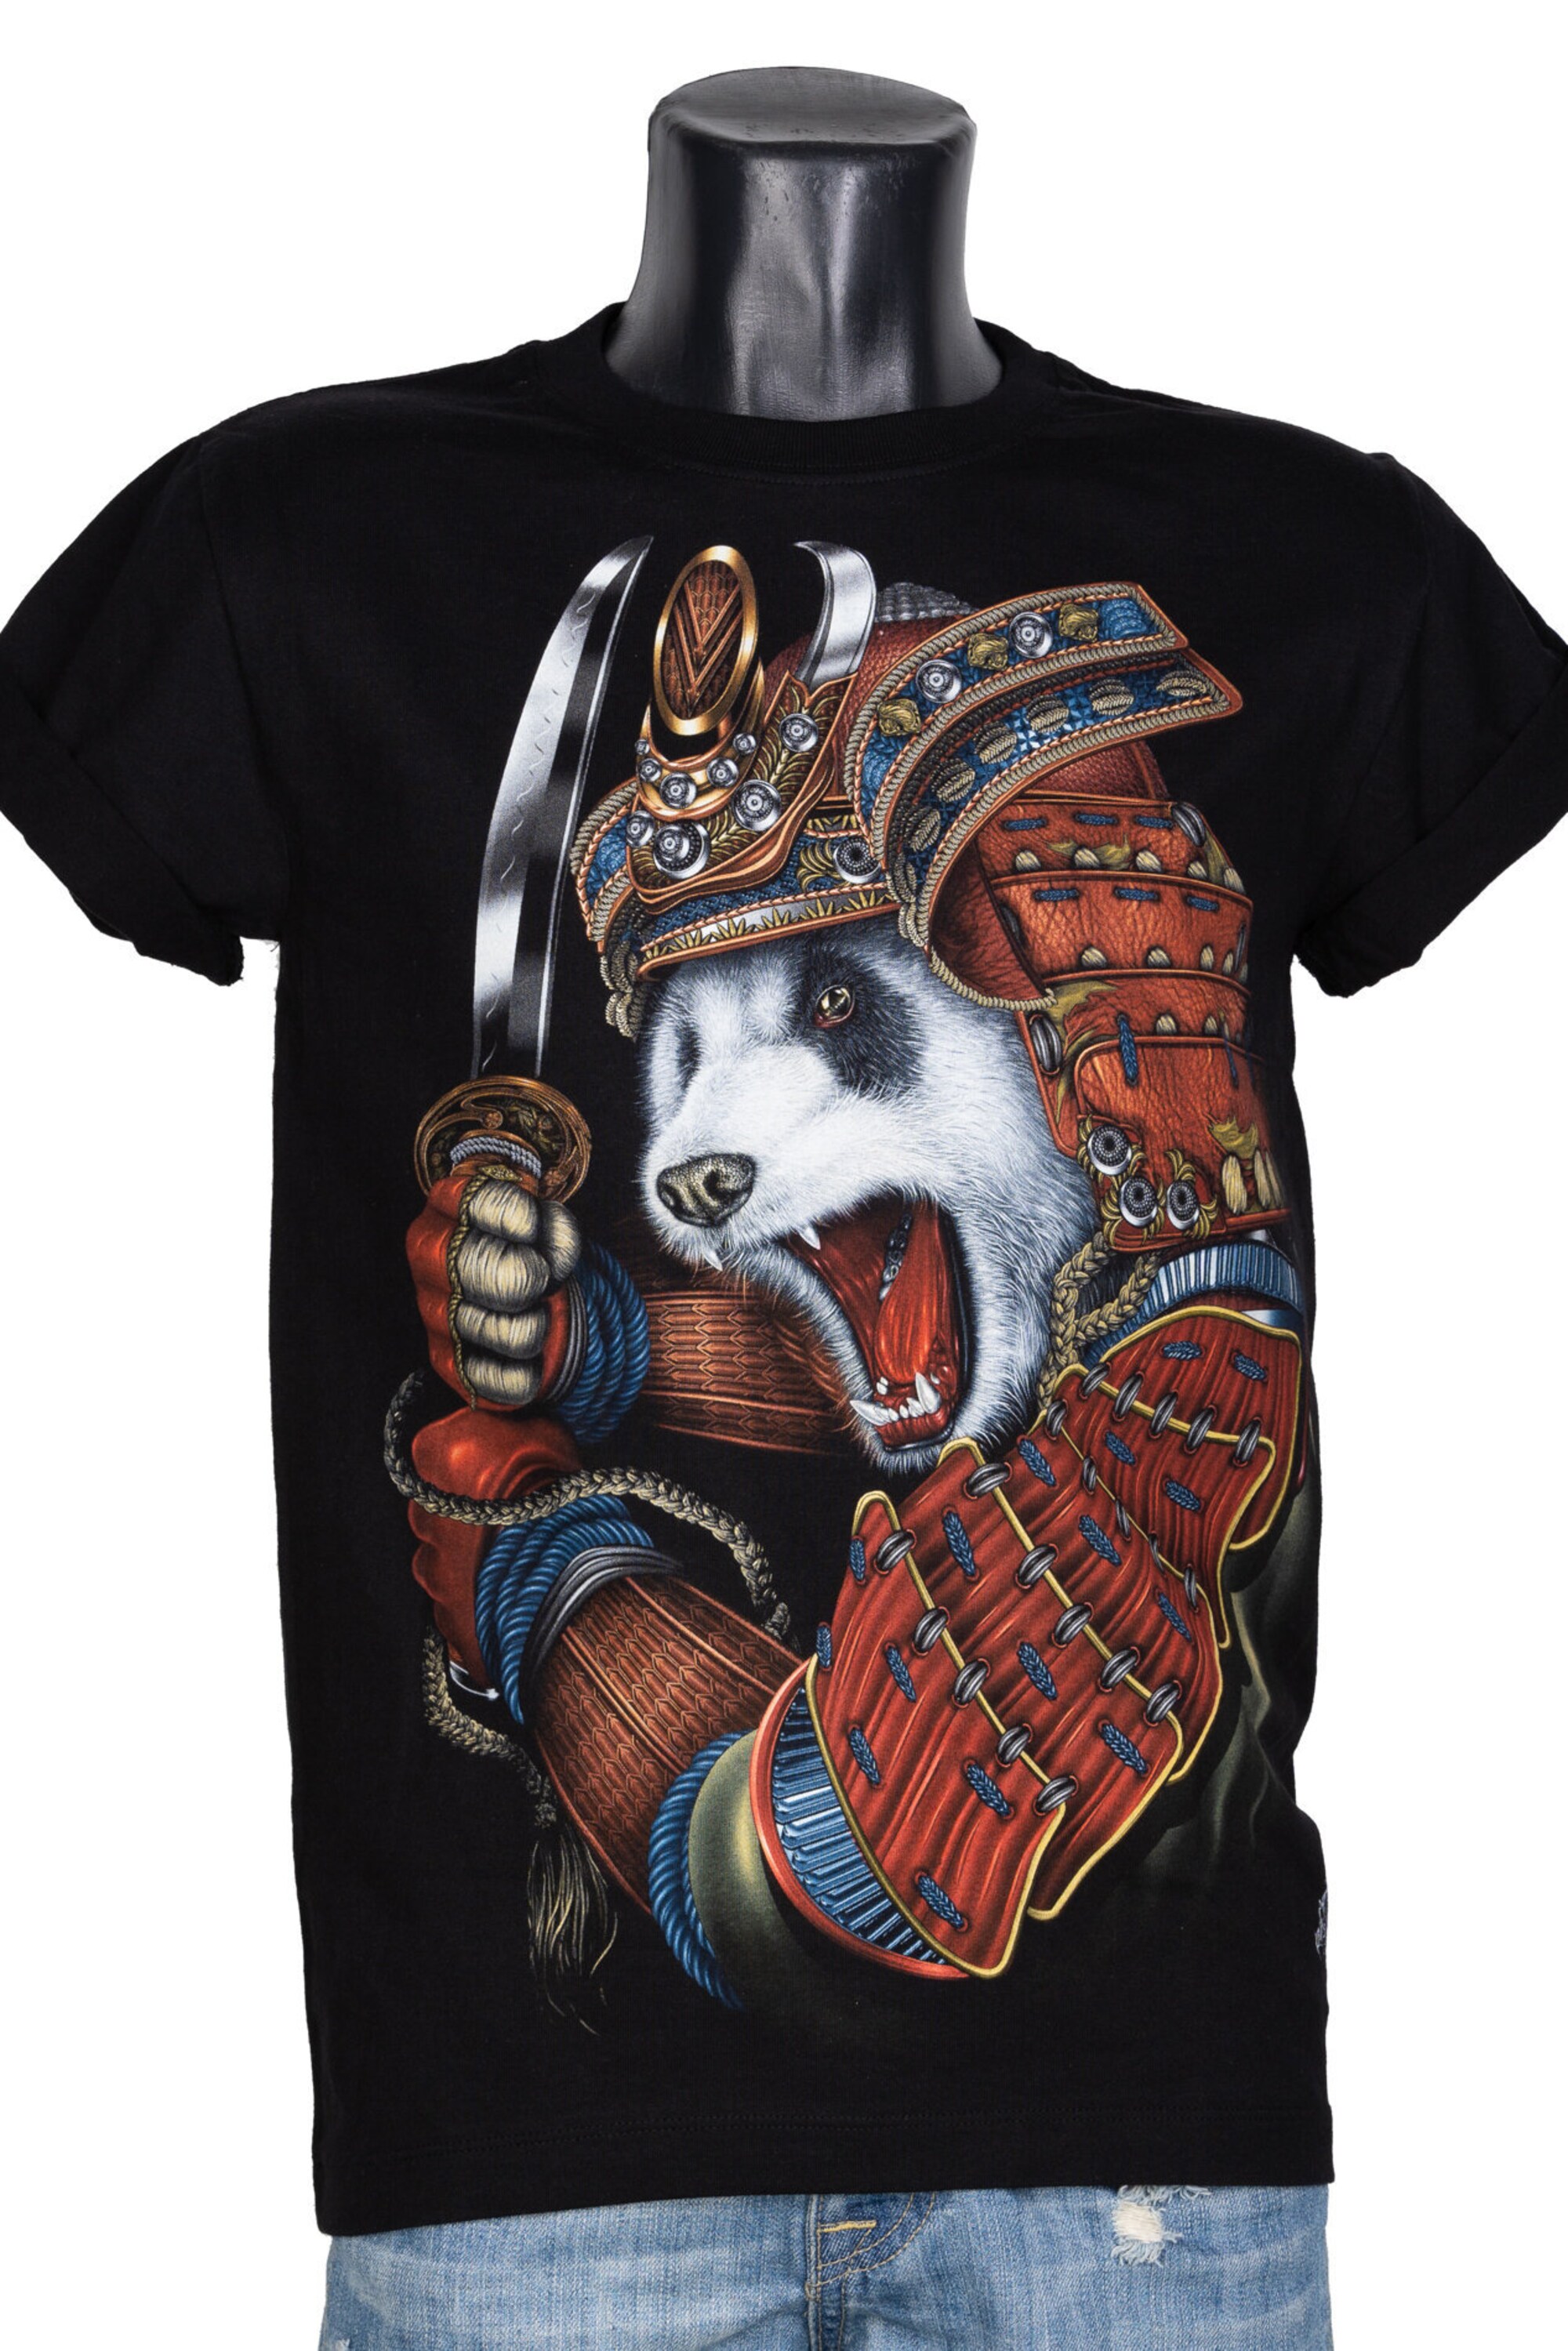 T-shirt Rock Chang Original Samurai Panda Warrior Glow in the Dark Unisex